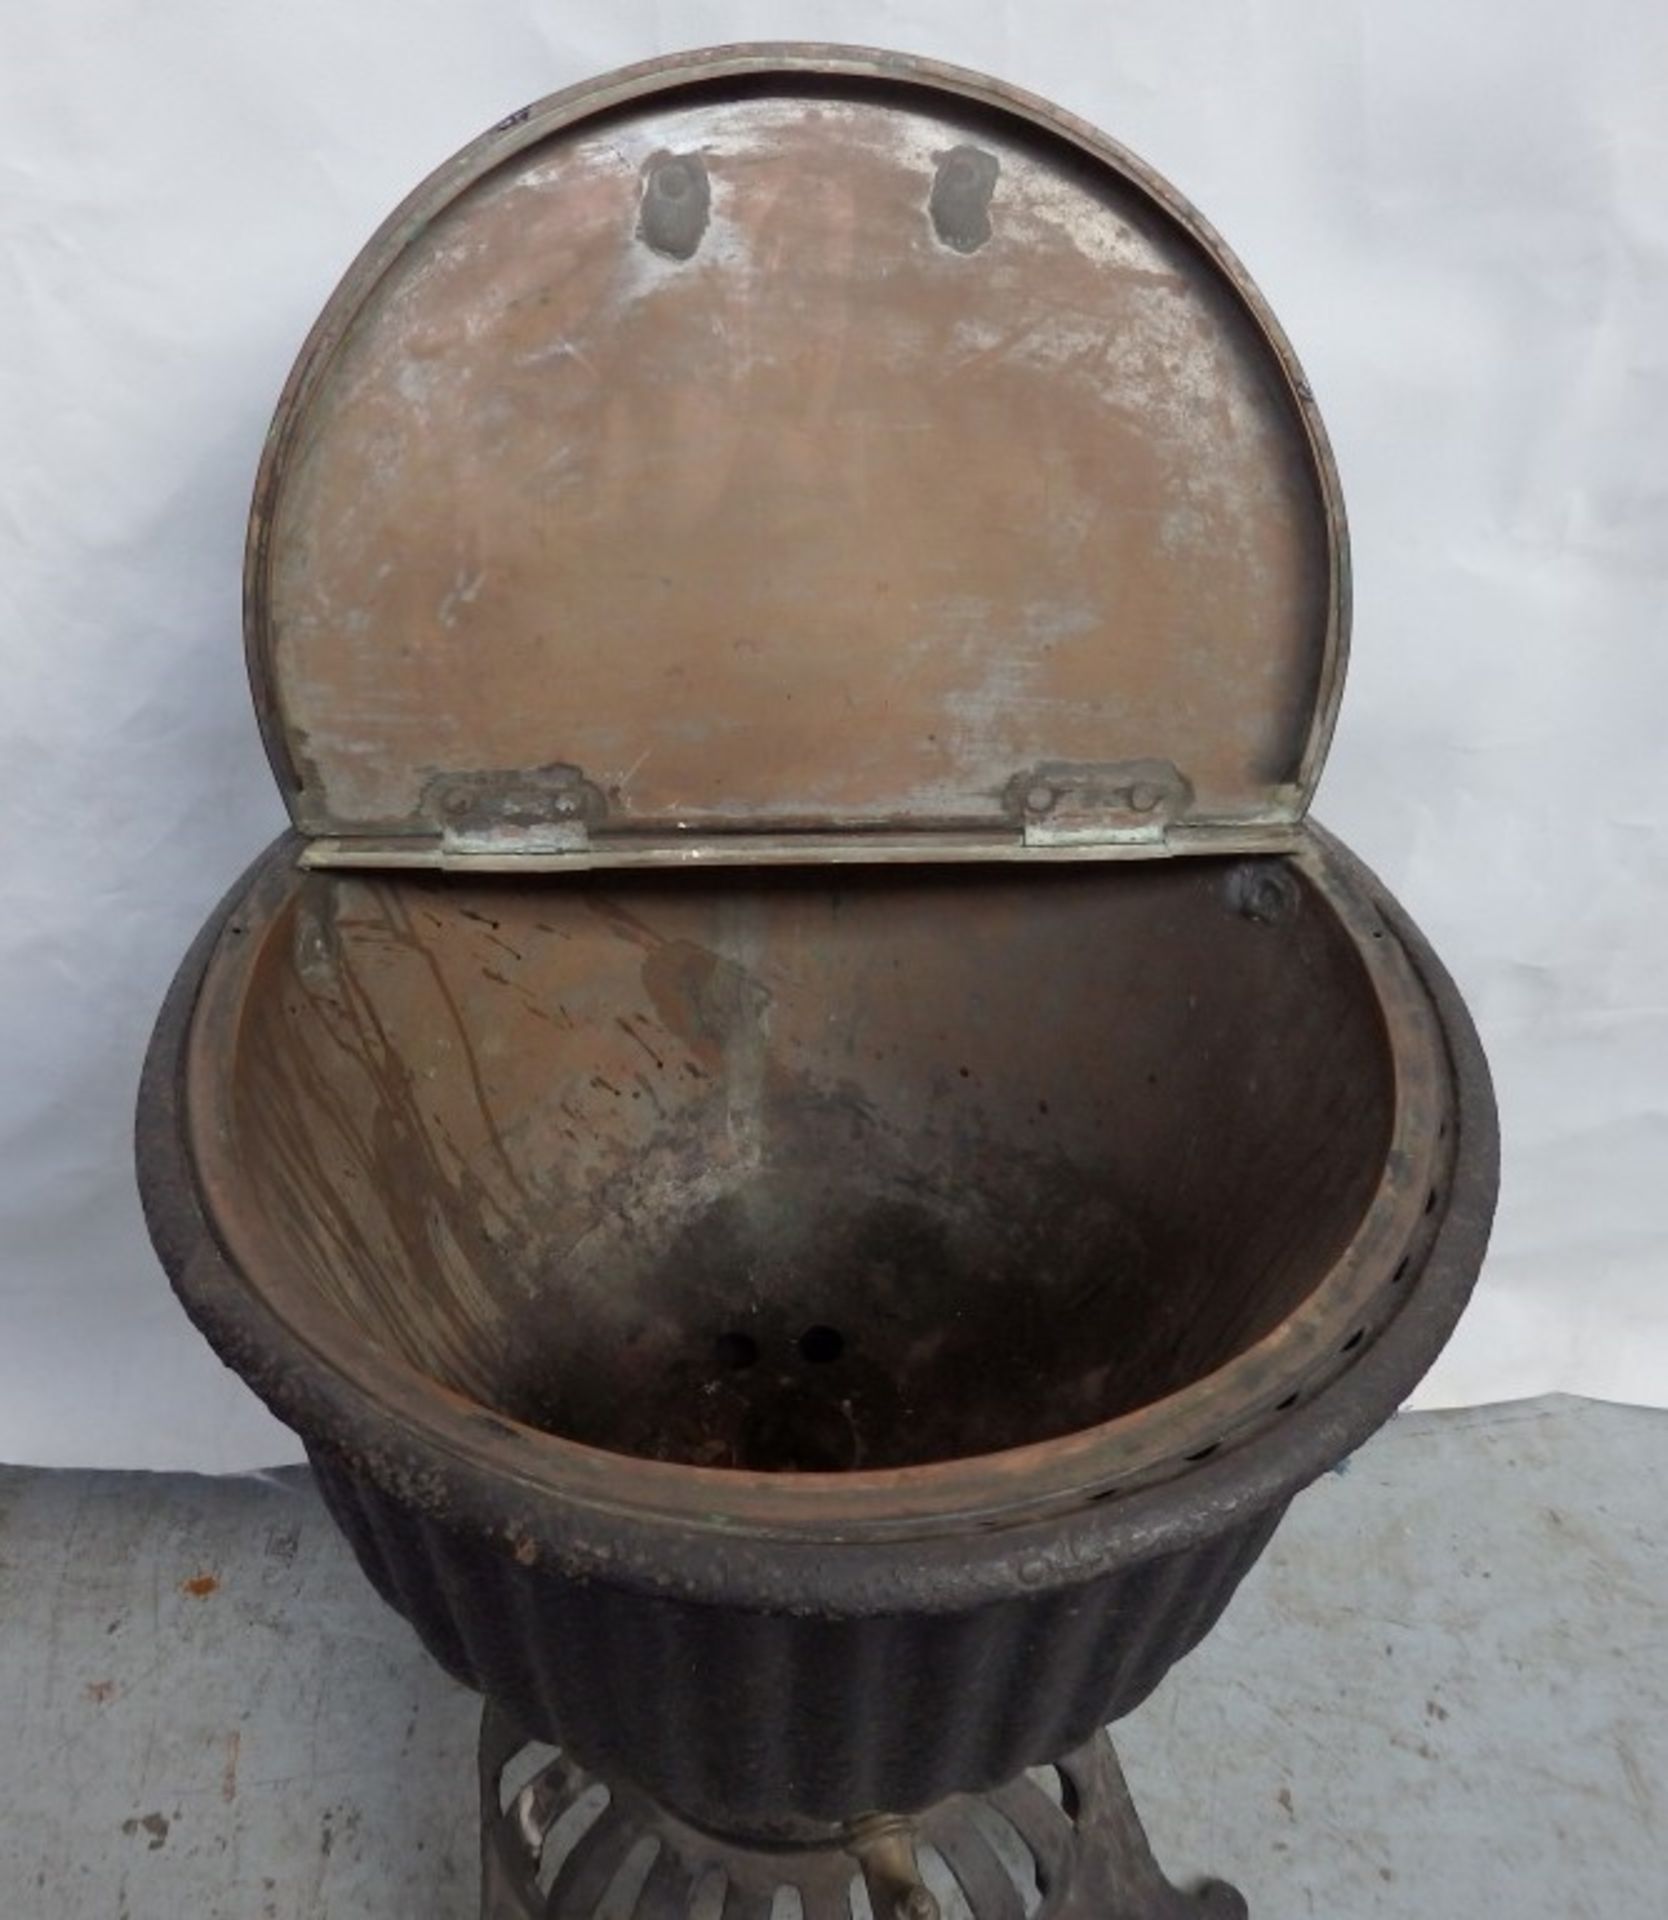 1 x Reclaimed Antique Cast Iron SAMOVAR / TEA URN - Dimensions: H70, Diameter 48cm - Ref VI004 - - Image 4 of 8